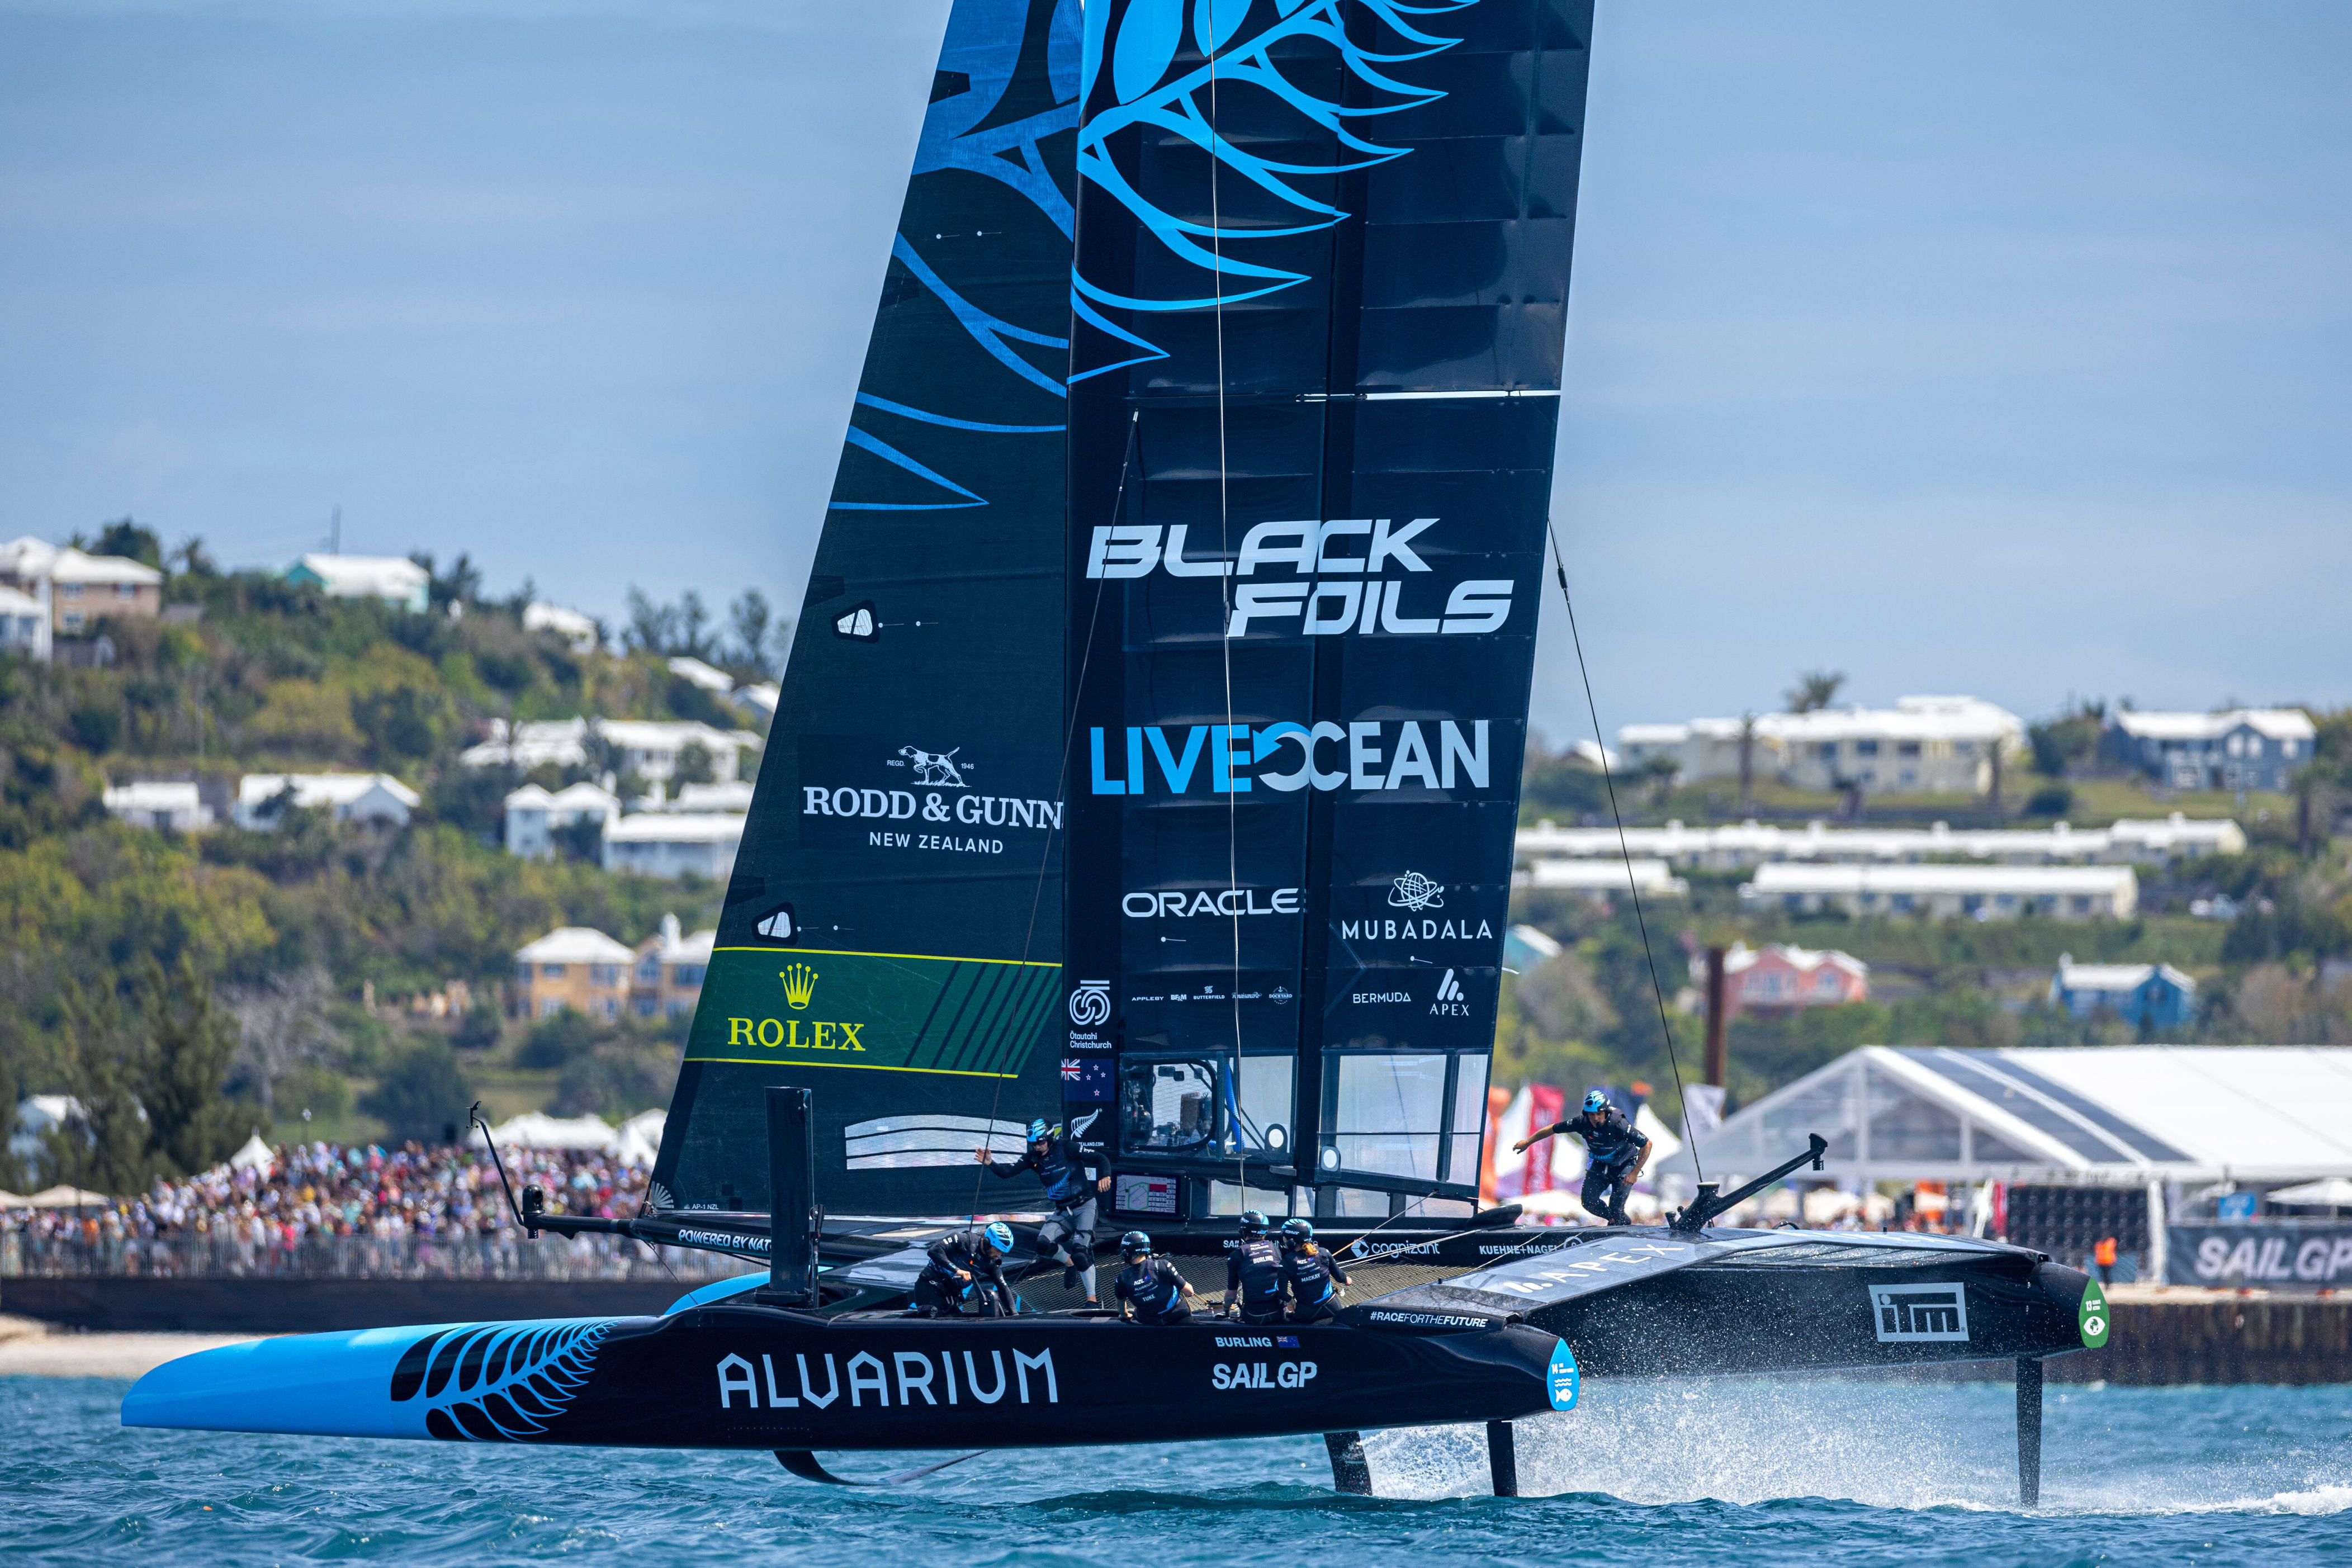 sailgp bermuda: black foils extend their season lead with podium finish in bermuda